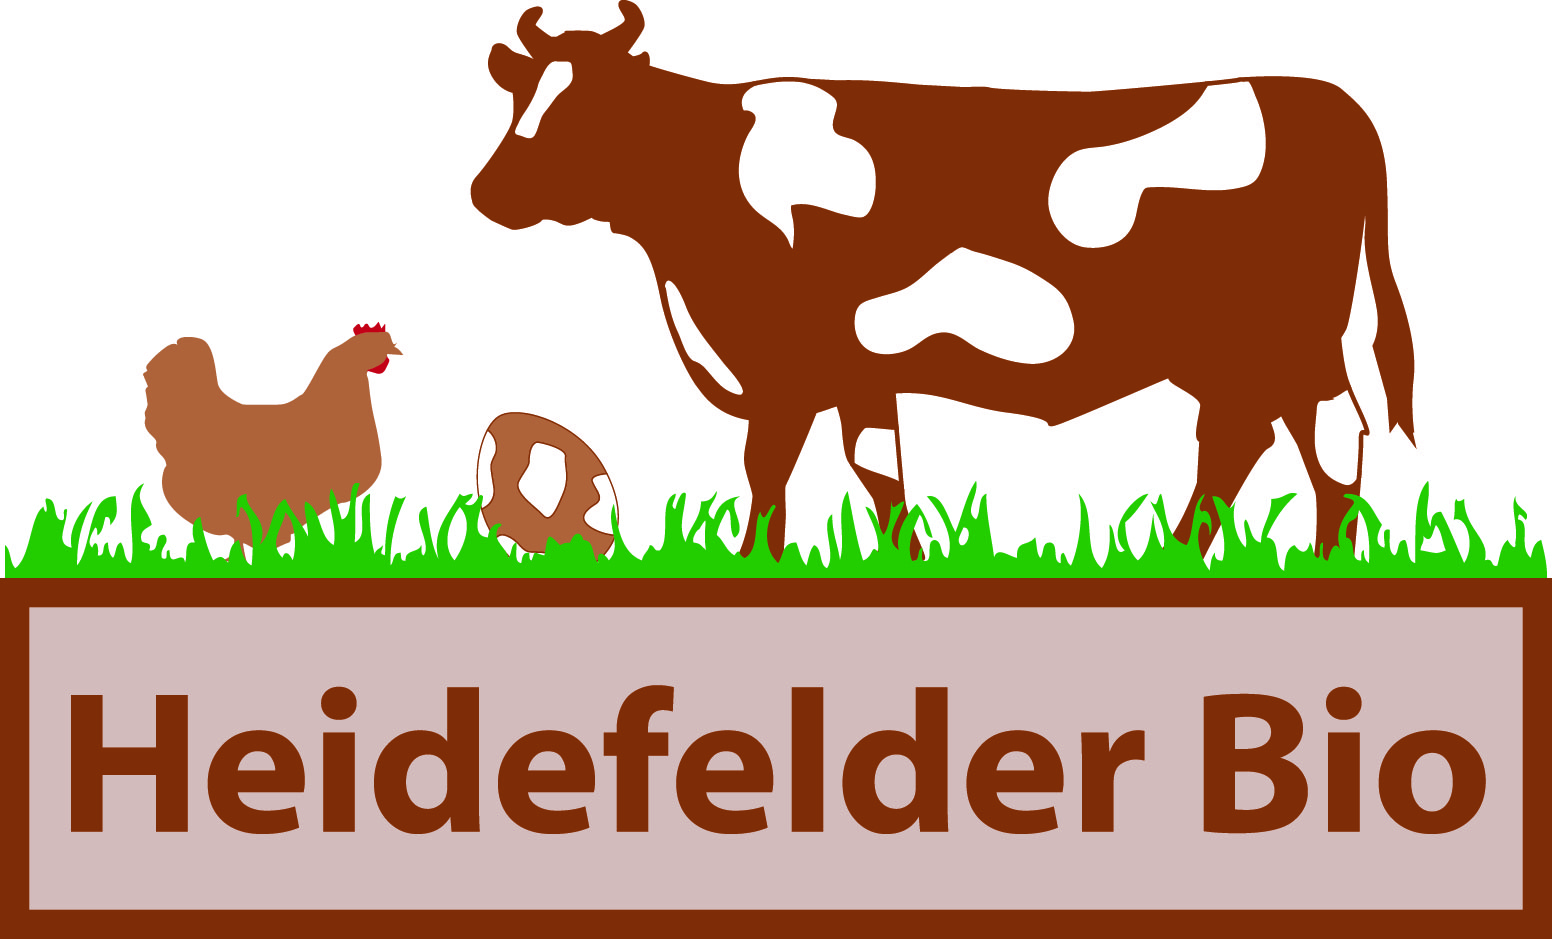 Heidefelder Bio